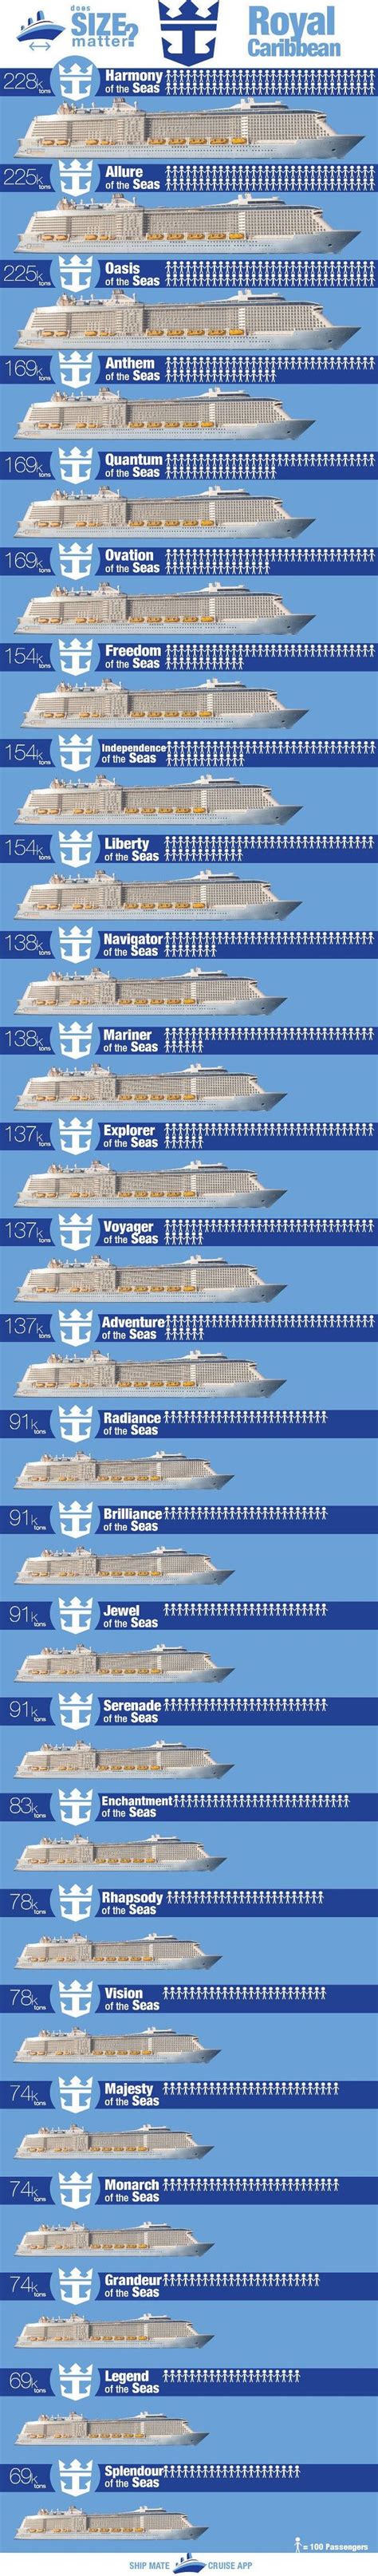 Royal Caribbean Ships Size Chart